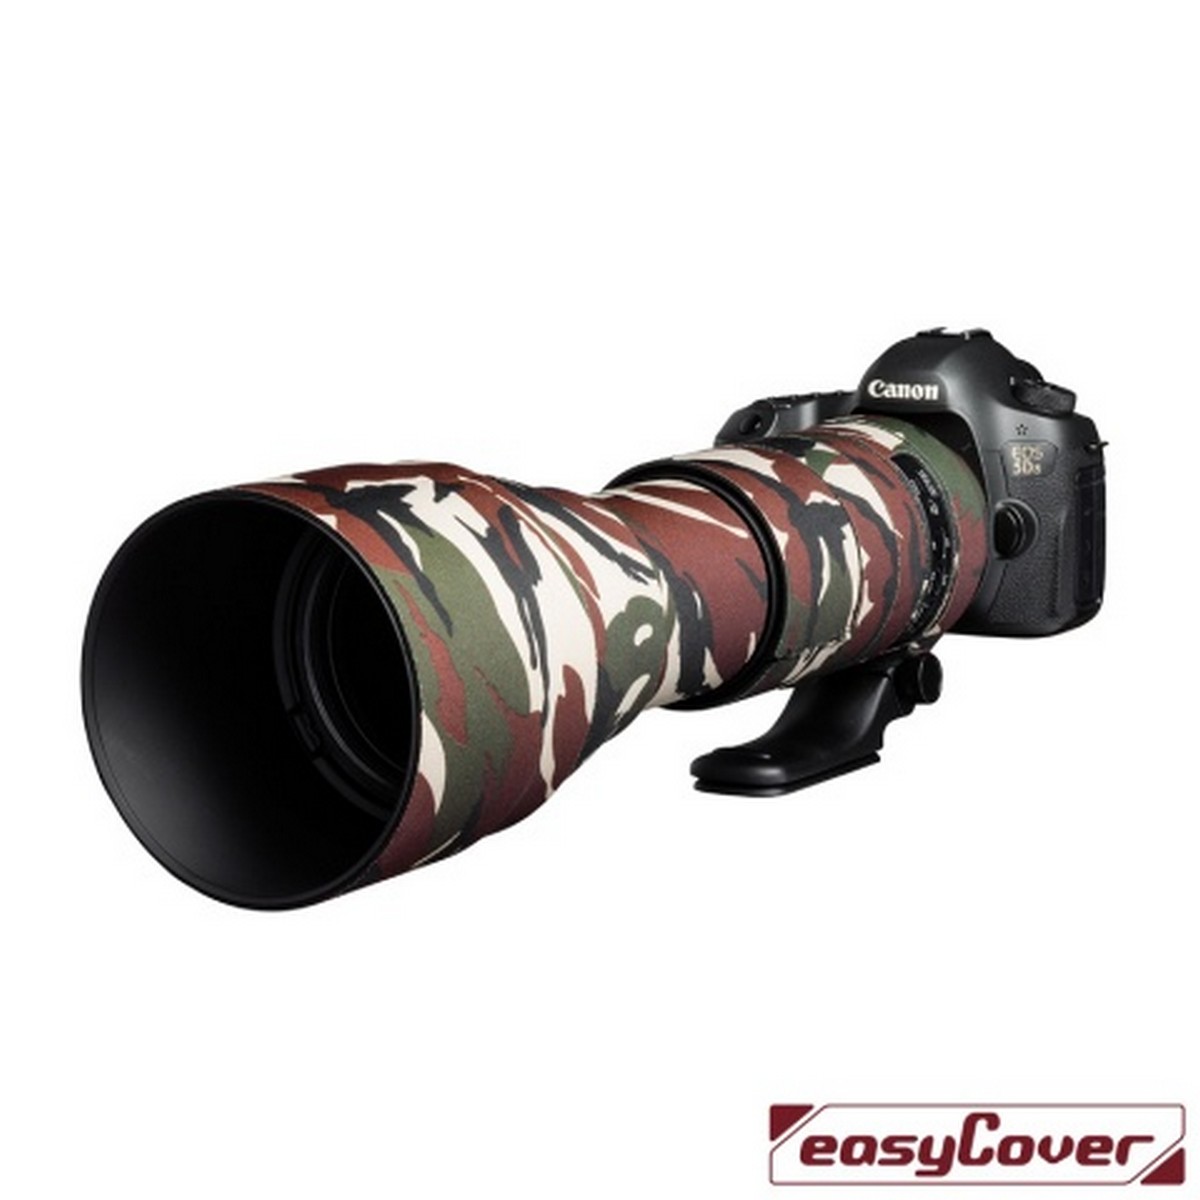 Easycover Lens Oak Objektivschutz für Tamron 150-600 mm 1:5-6,3 Di VC USD G2 Grün Camouflage